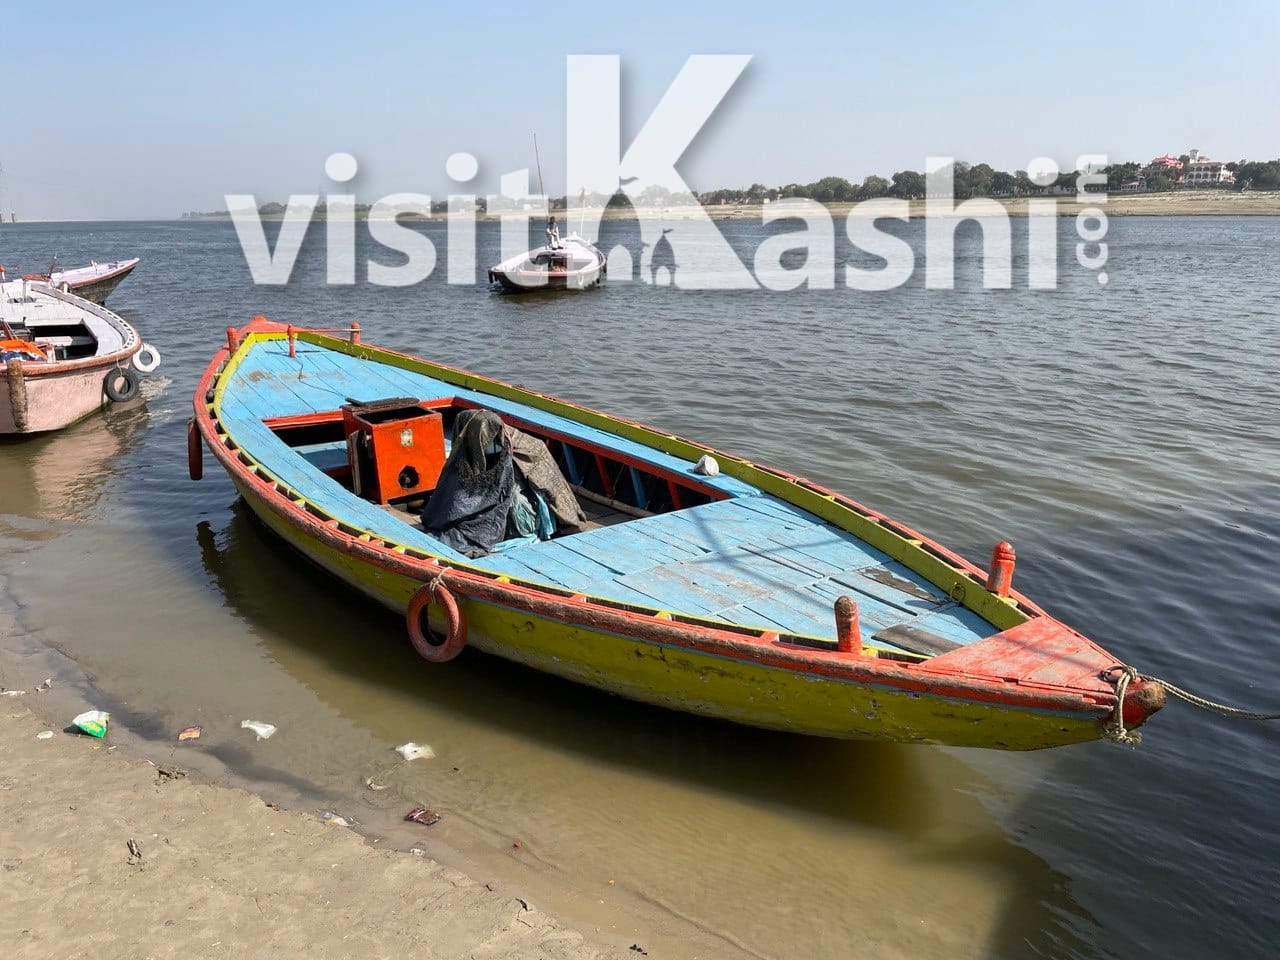 Ganga-aatri-varanasi-online-booking